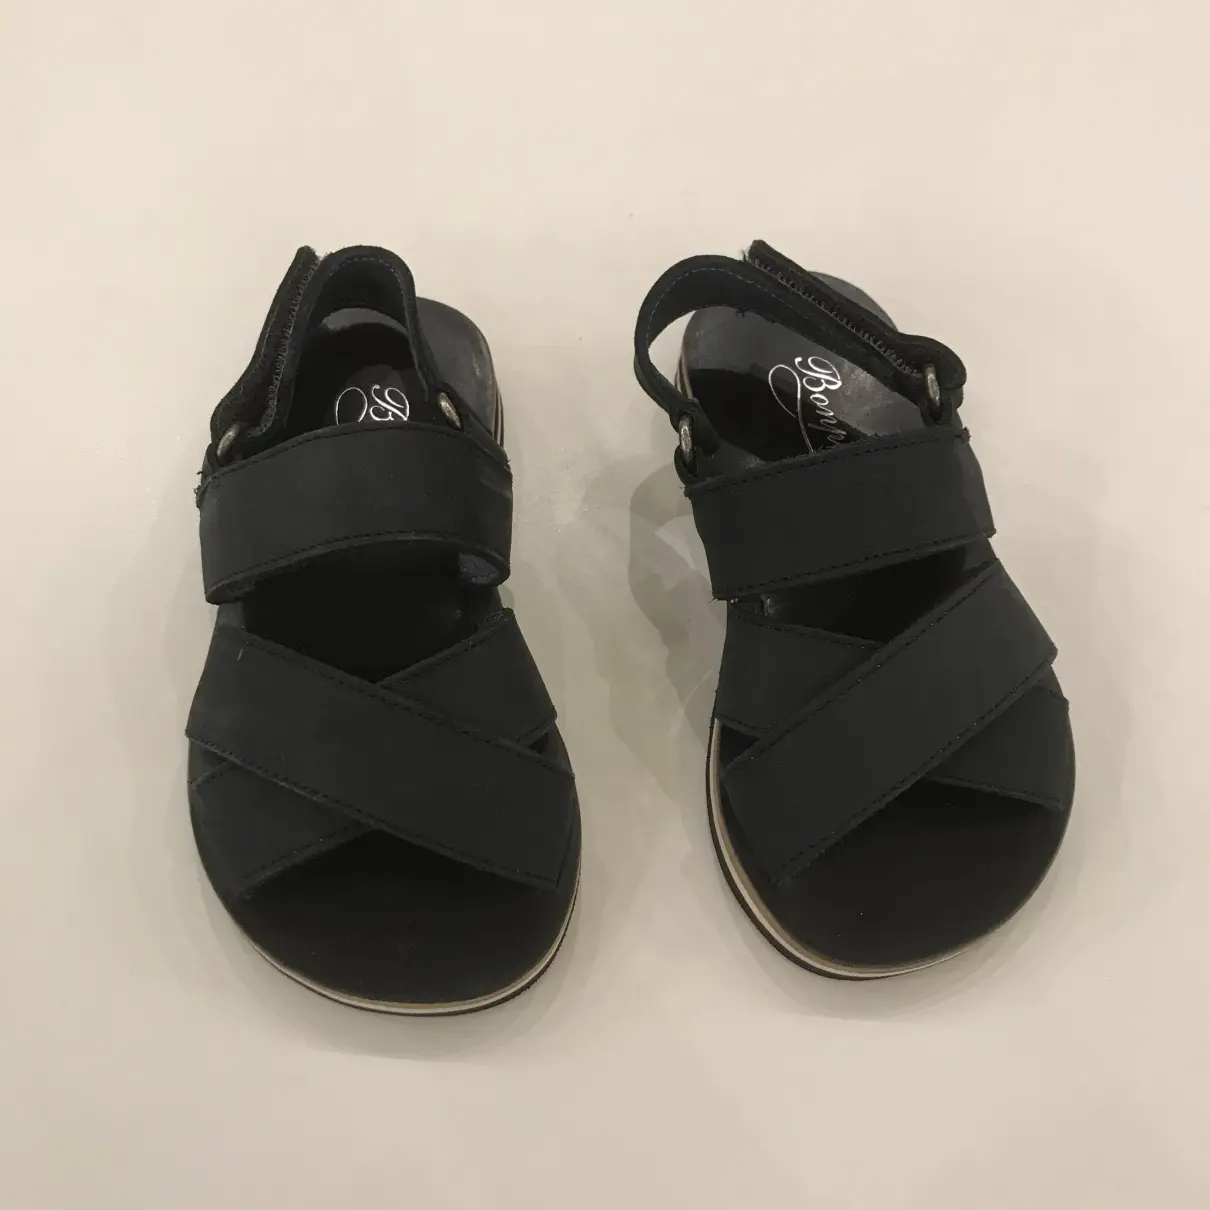 Bonpoint Cloth sandals for sale